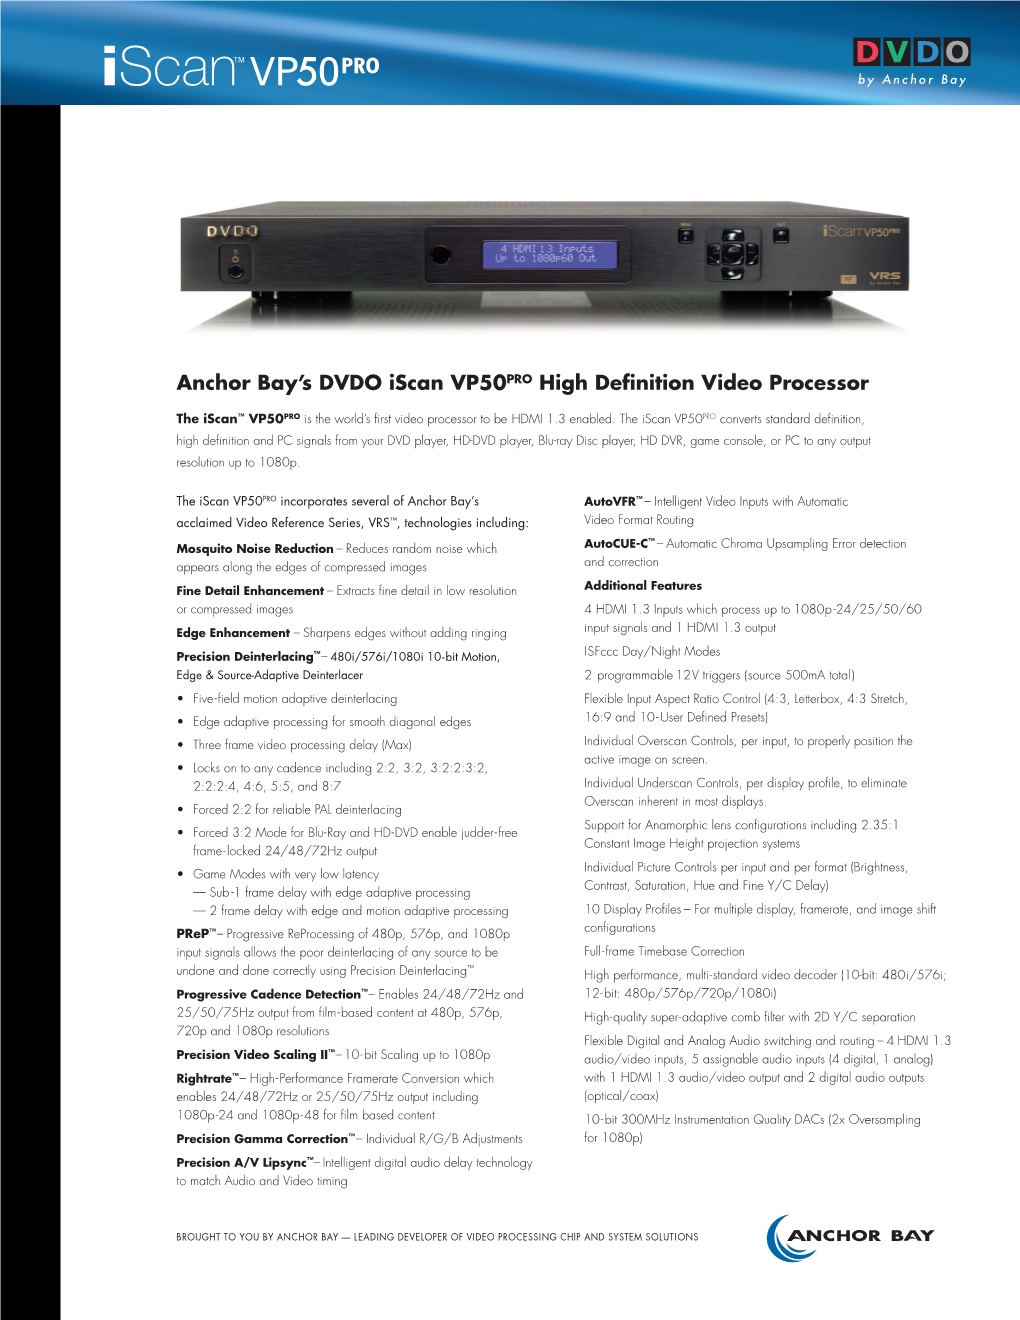 Anchor Bay's DVDO Iscan VP50PRO High Definition Video Processor